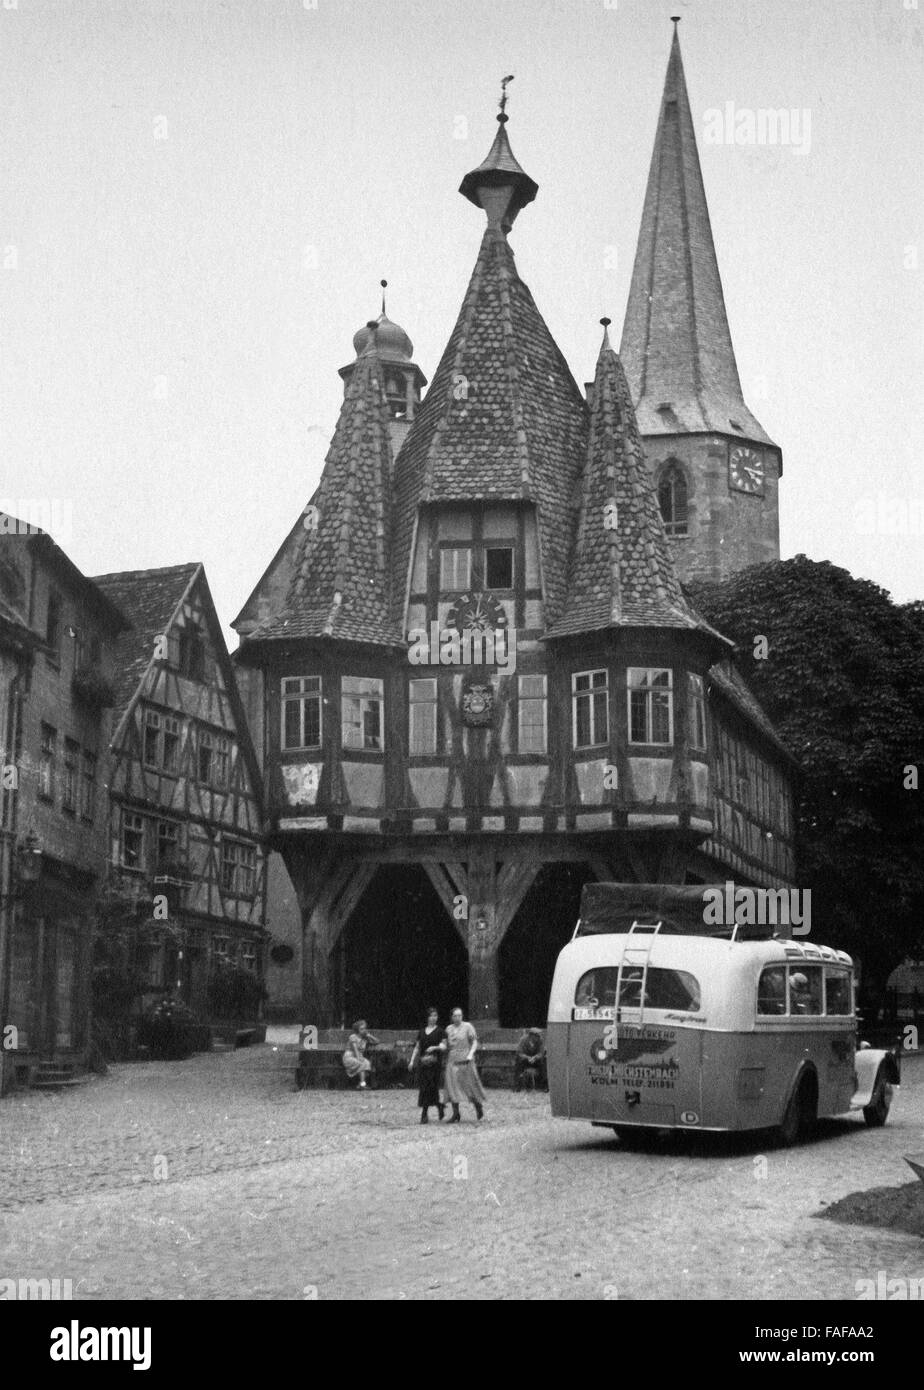 Il Rathaus und Kirche in Michelstadt im Odenwald mit Reisebus davor, Deutschland 1930er Jahre. Autobus di fronte al municipio e chiesa a Michelstadt in corrispondenza della regione di Odenwald, Germania 1930s. Foto Stock